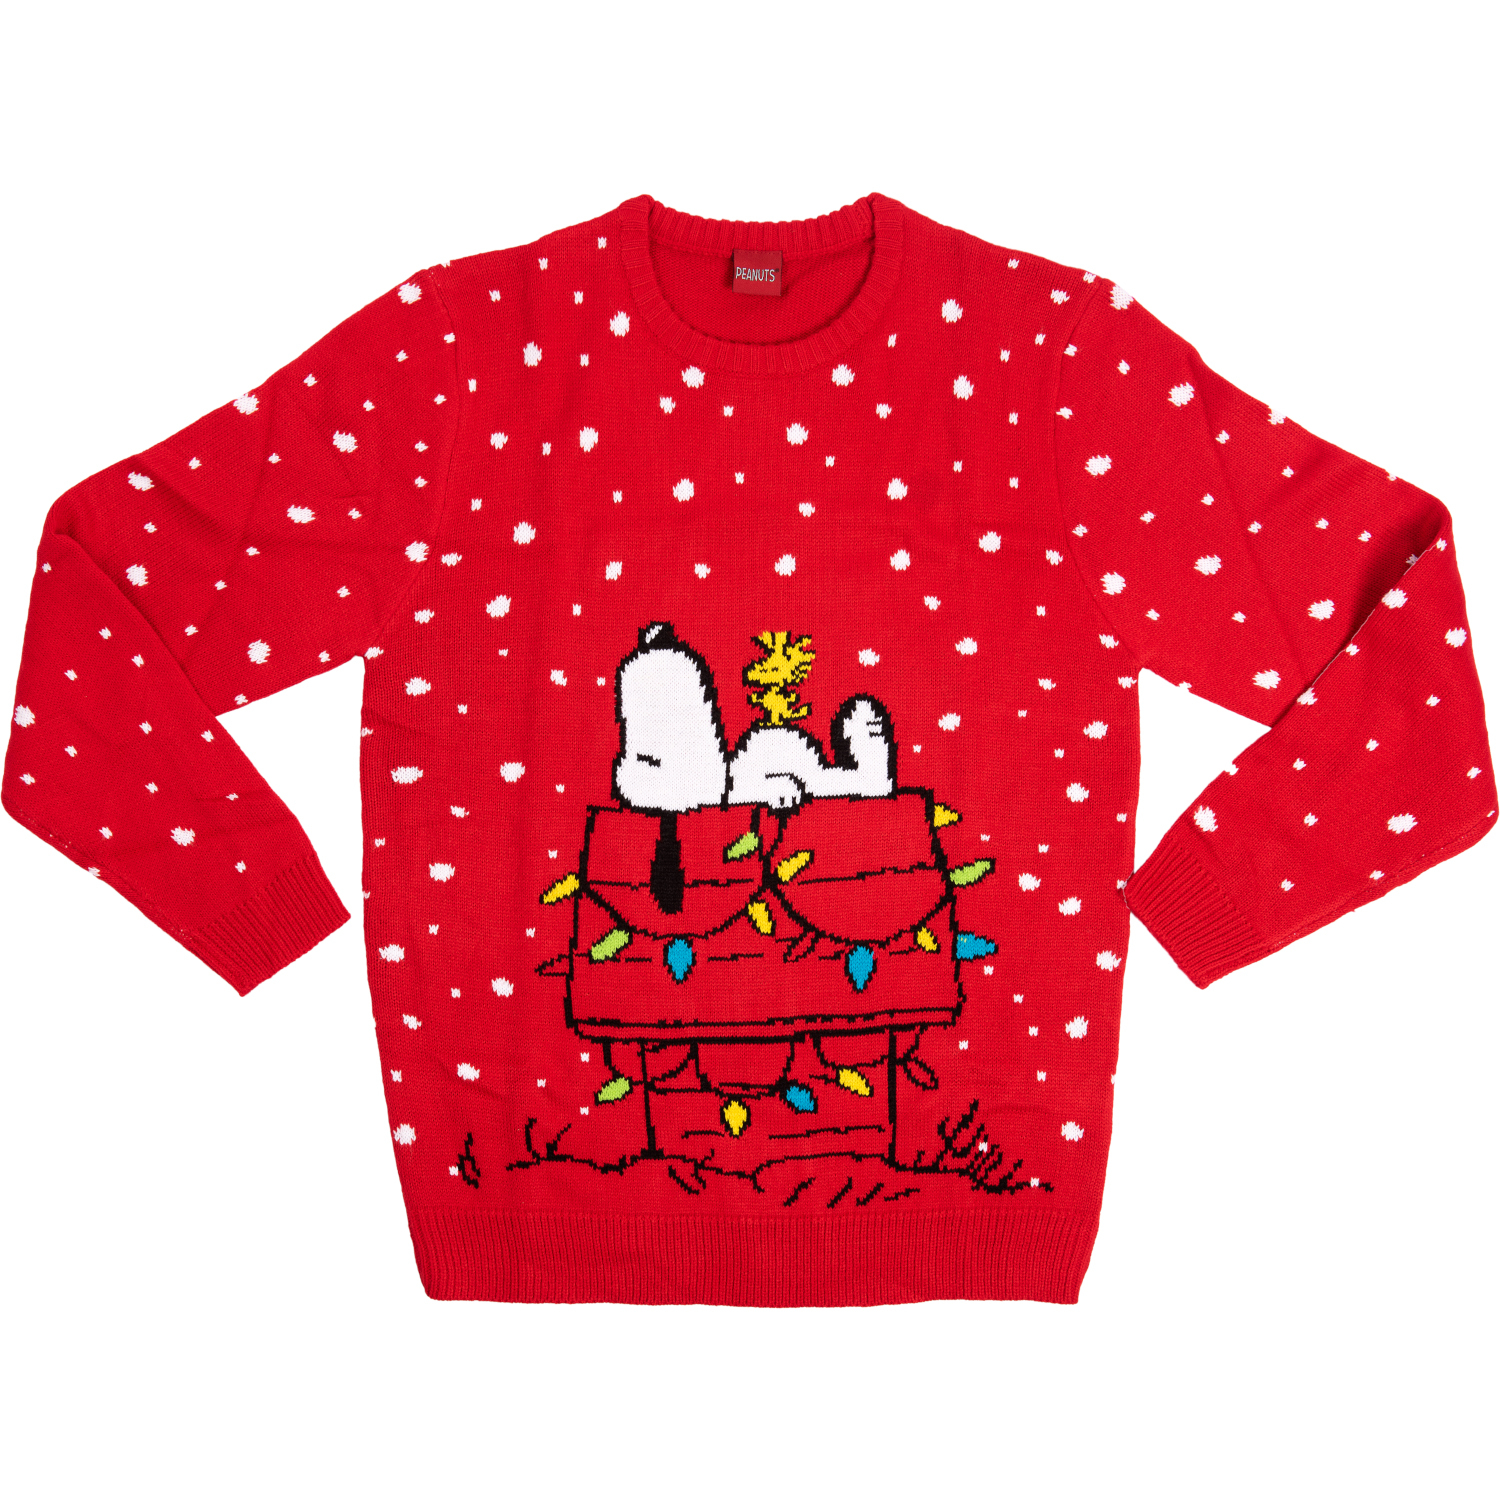 Peanuts Snoopy Winter Strick Pullover Sweatshirt Ugly Christmas Sweater Weihnachtspullover Weihnachten Fur Herren Damen Rot Elfen De